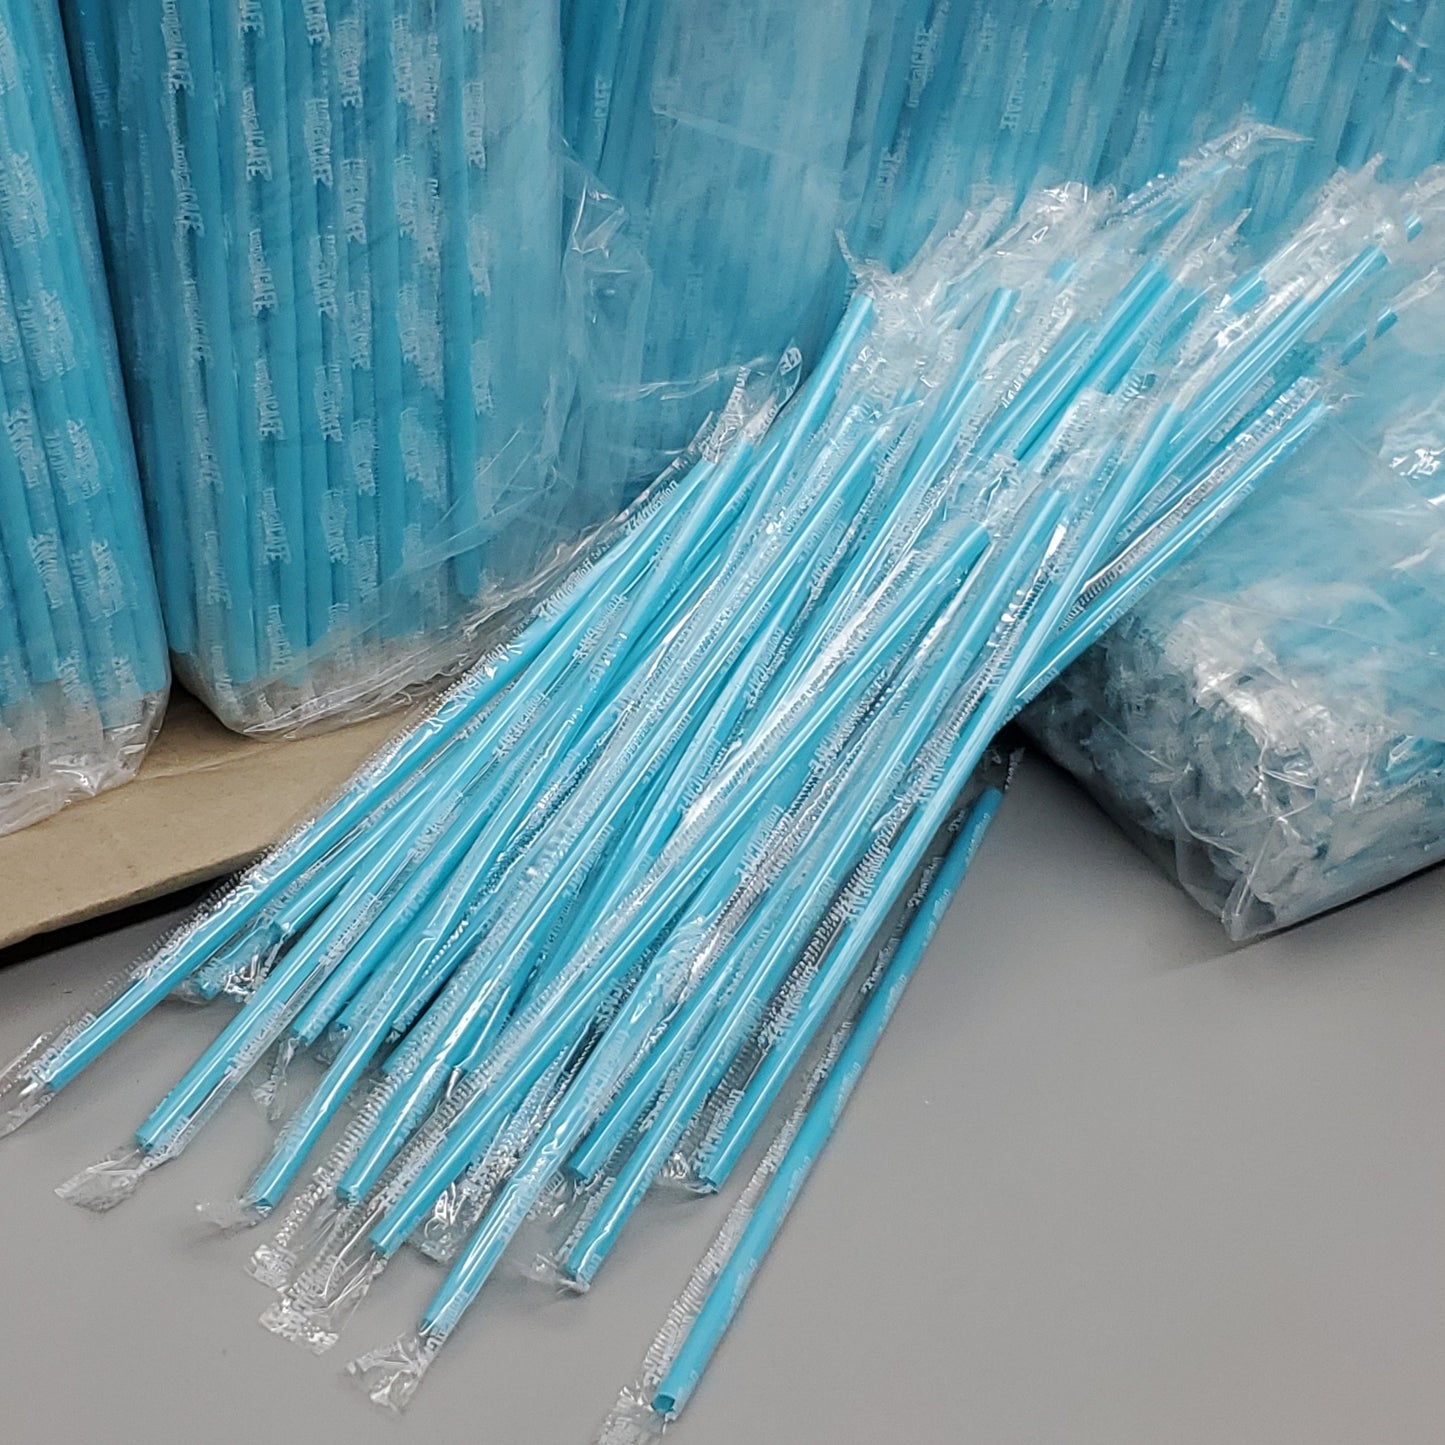 ZA@ CMI TSC (6000 PACK) Plastic Wrapped 9" Straws 7mm - 6m TSC-PS9-01 (New, Distressed Box) C